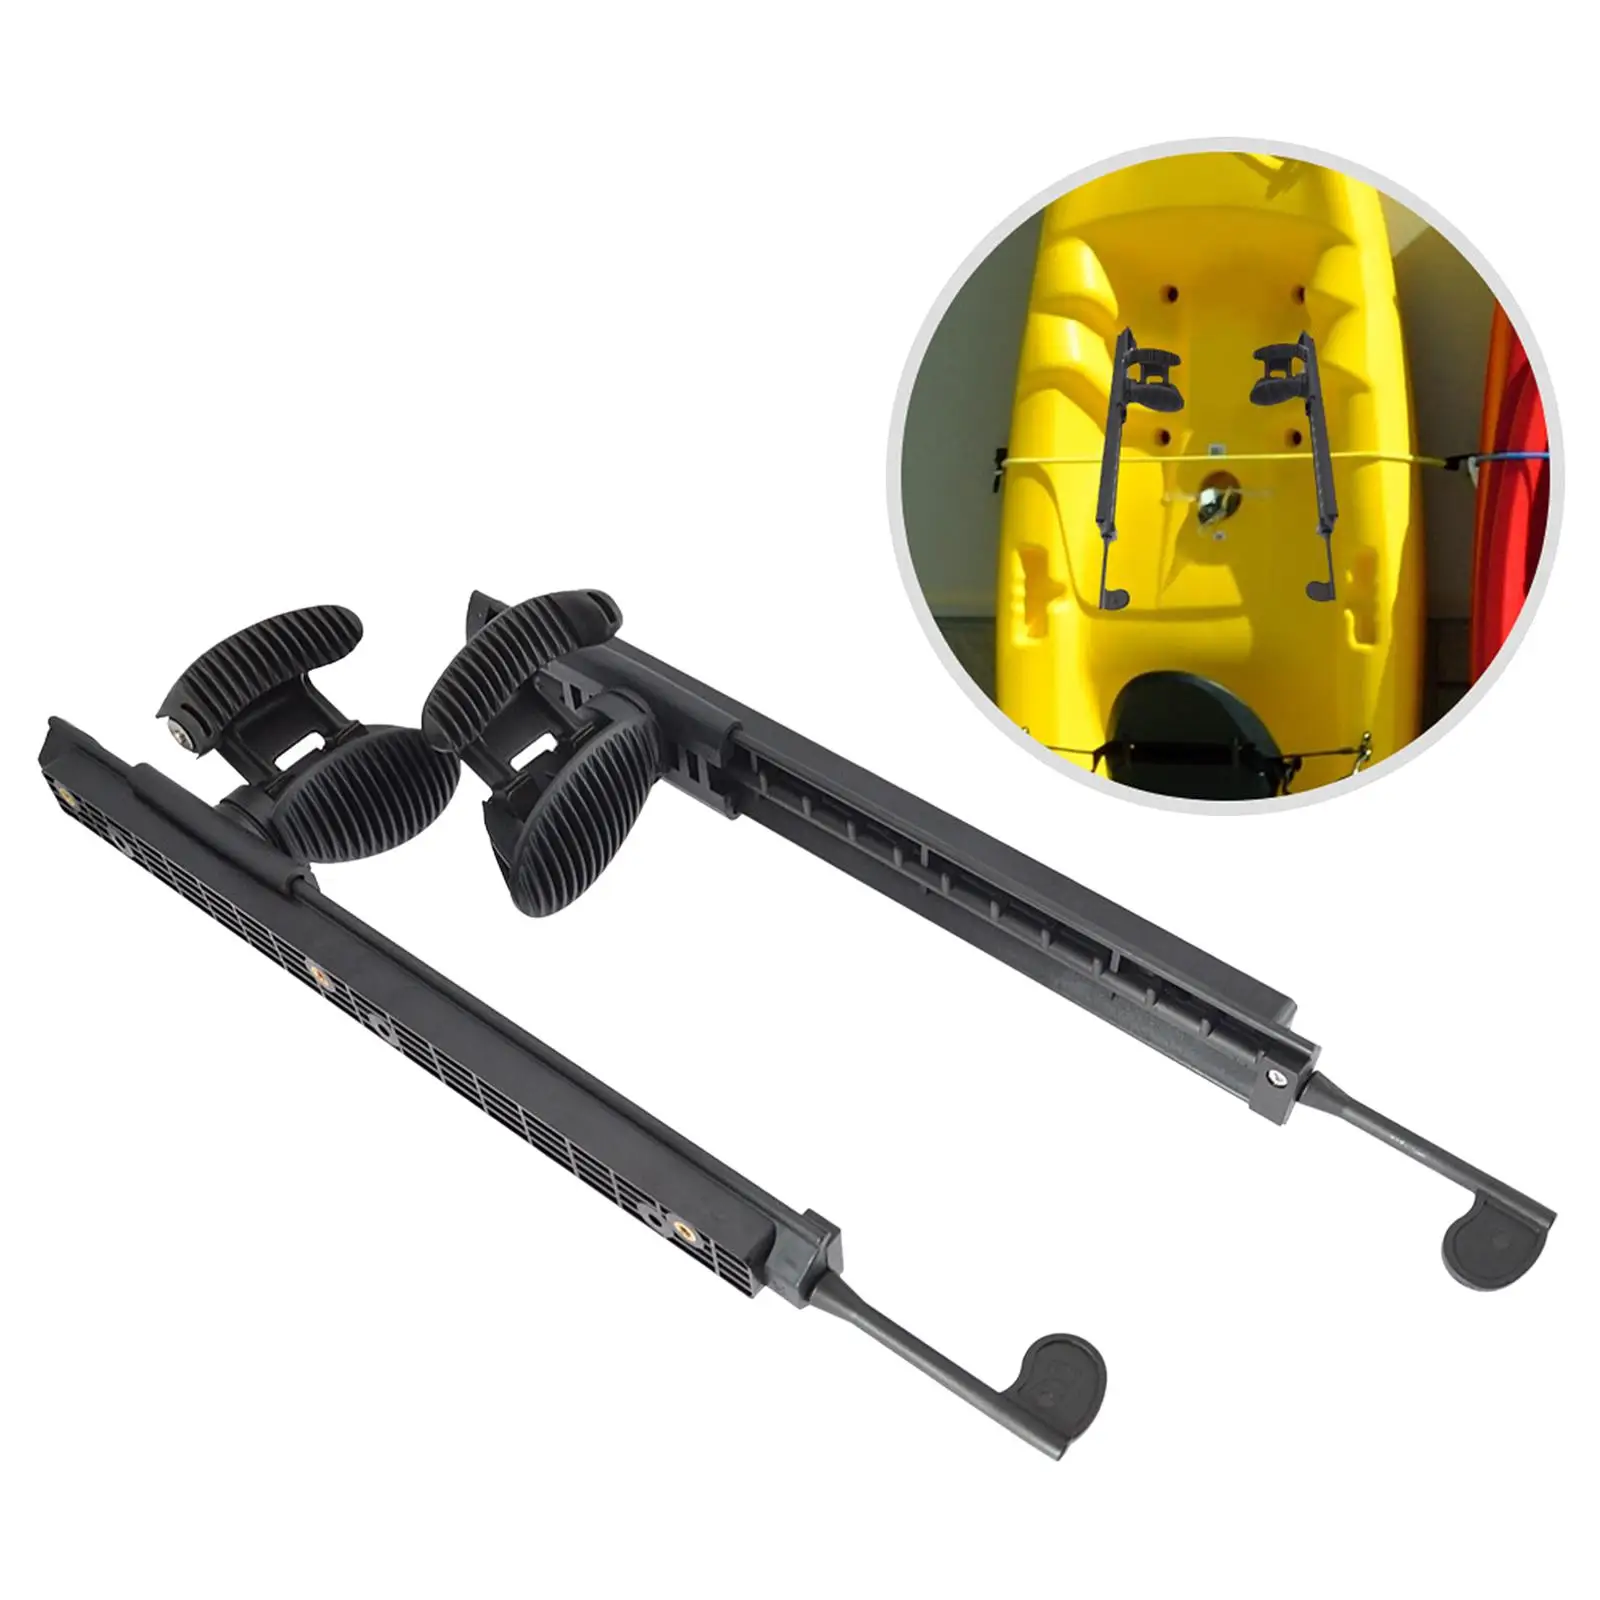 1 Pair Adjustable Nylon Kayak Footbrace Pedal Kayak Foot Pegs Rudder Control